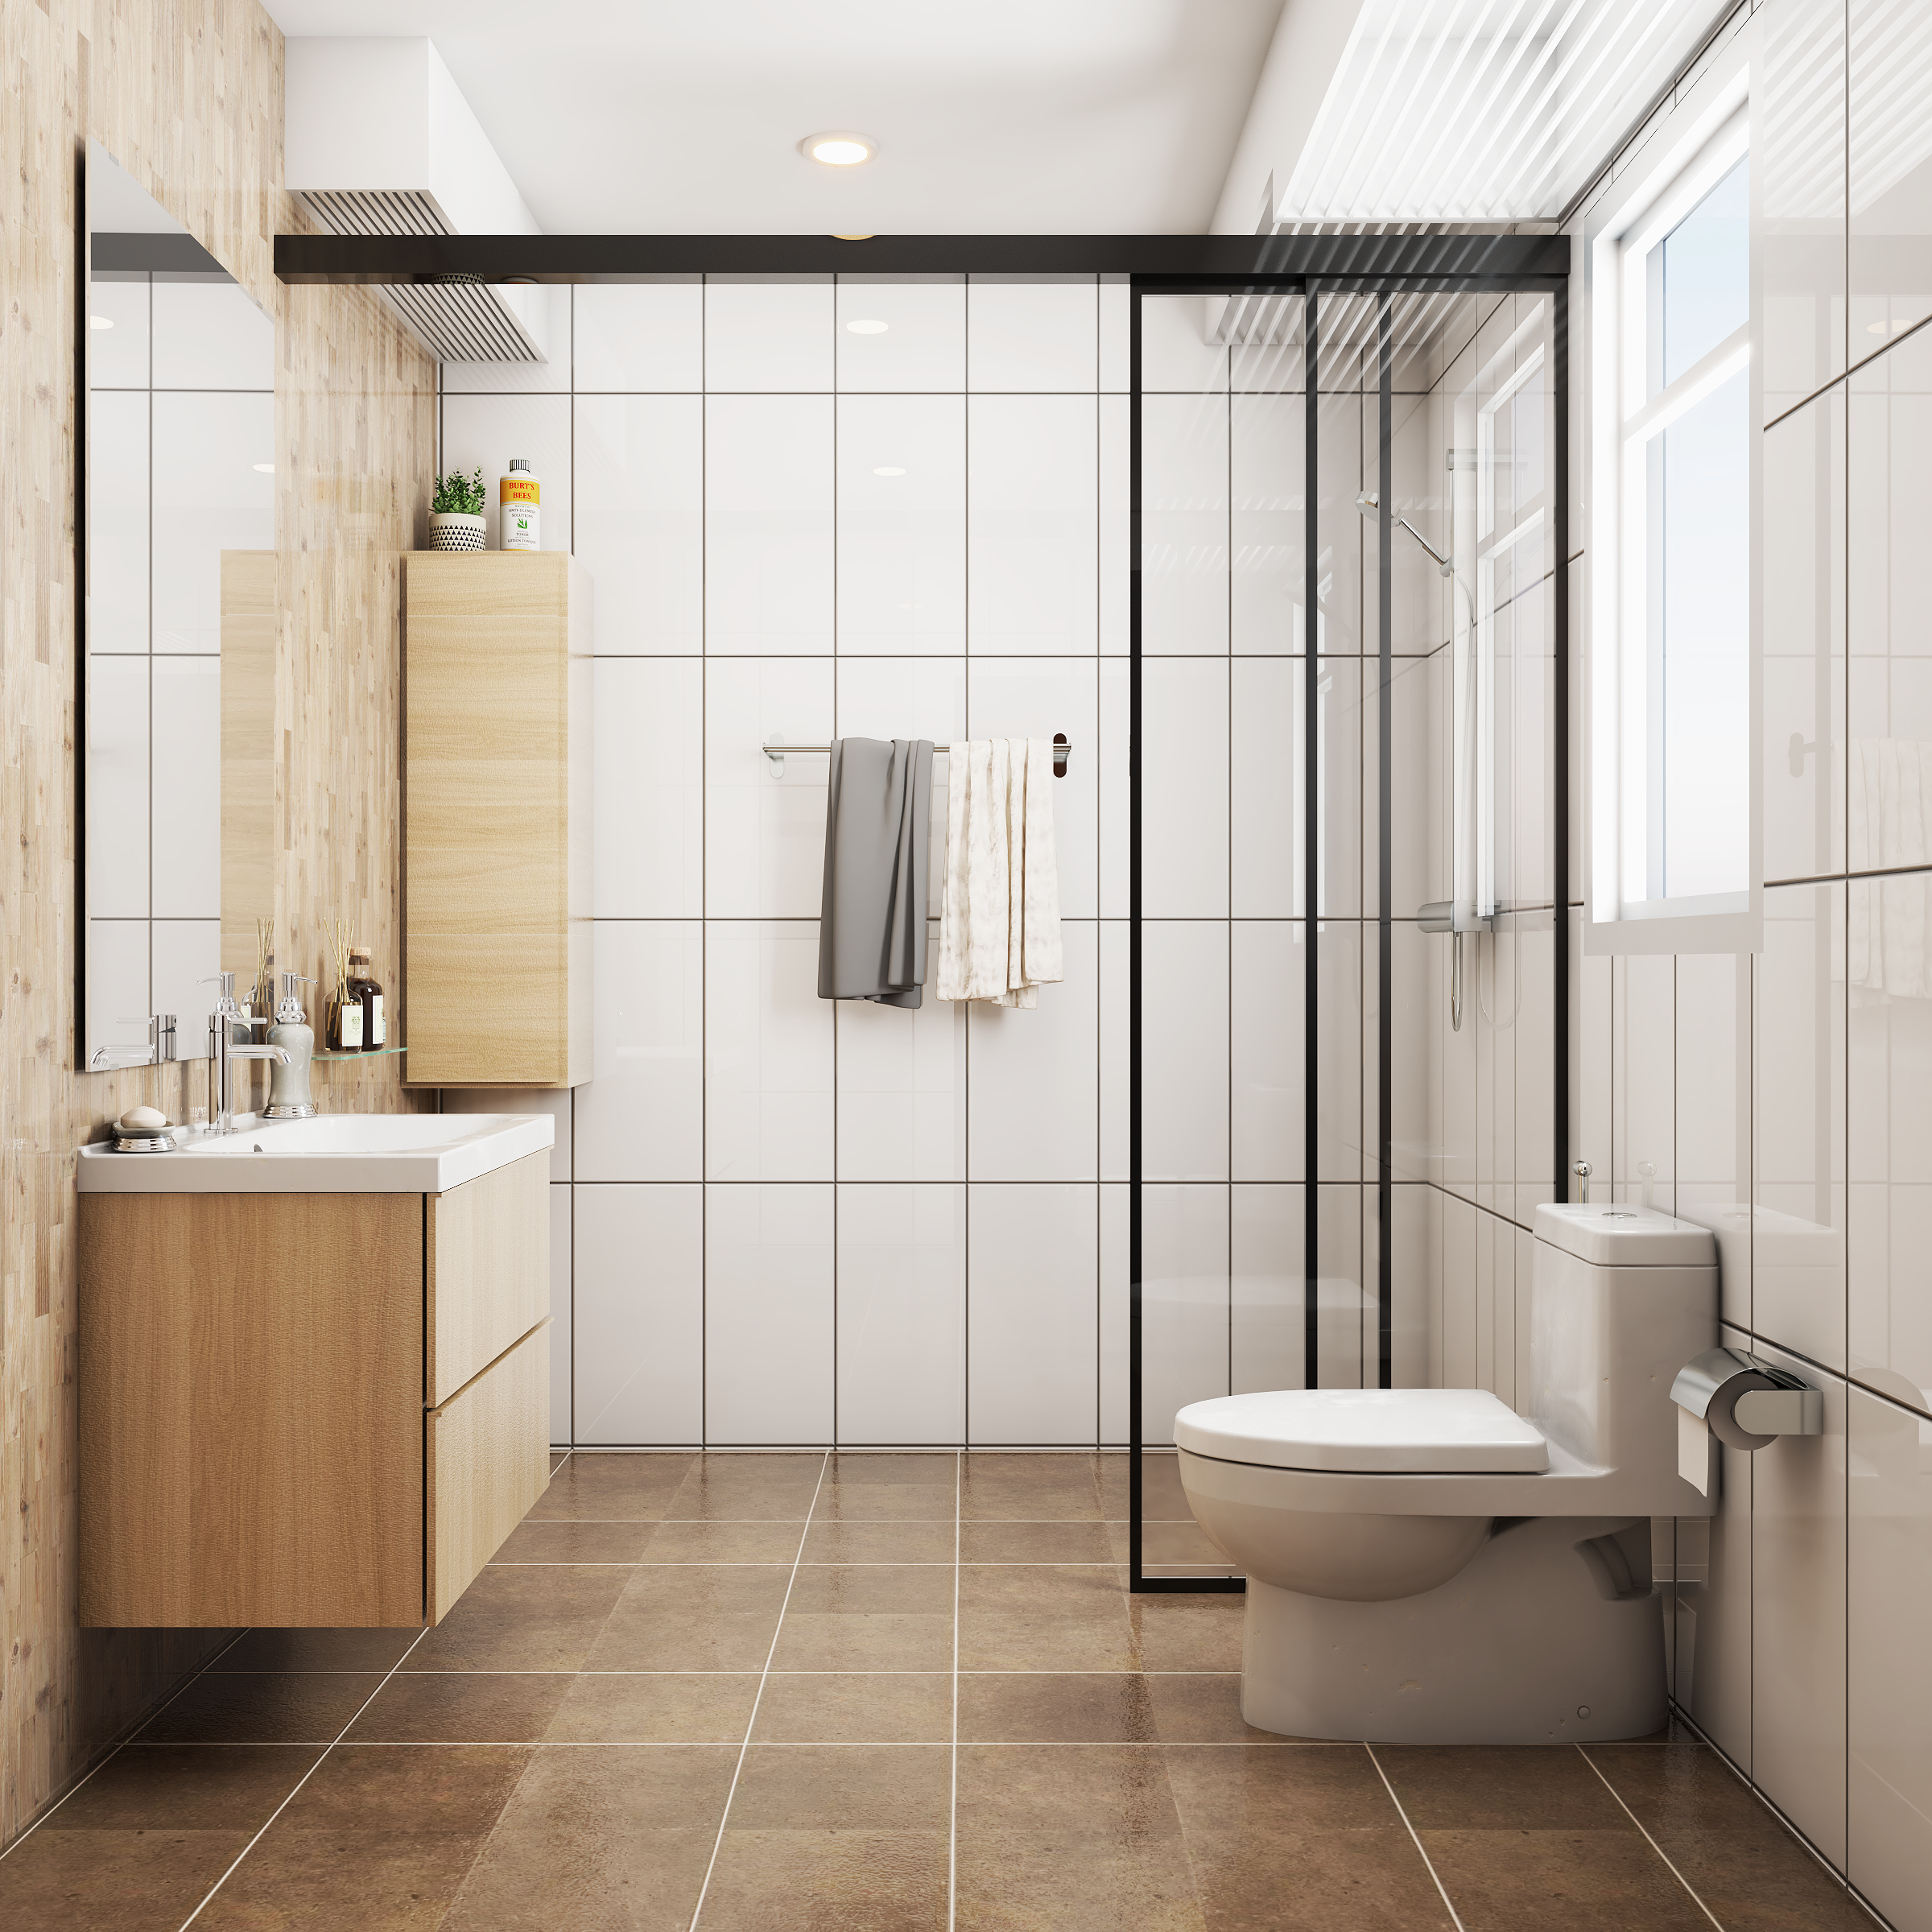 Scandinavian Style Bathroom Design For Spacious Layout